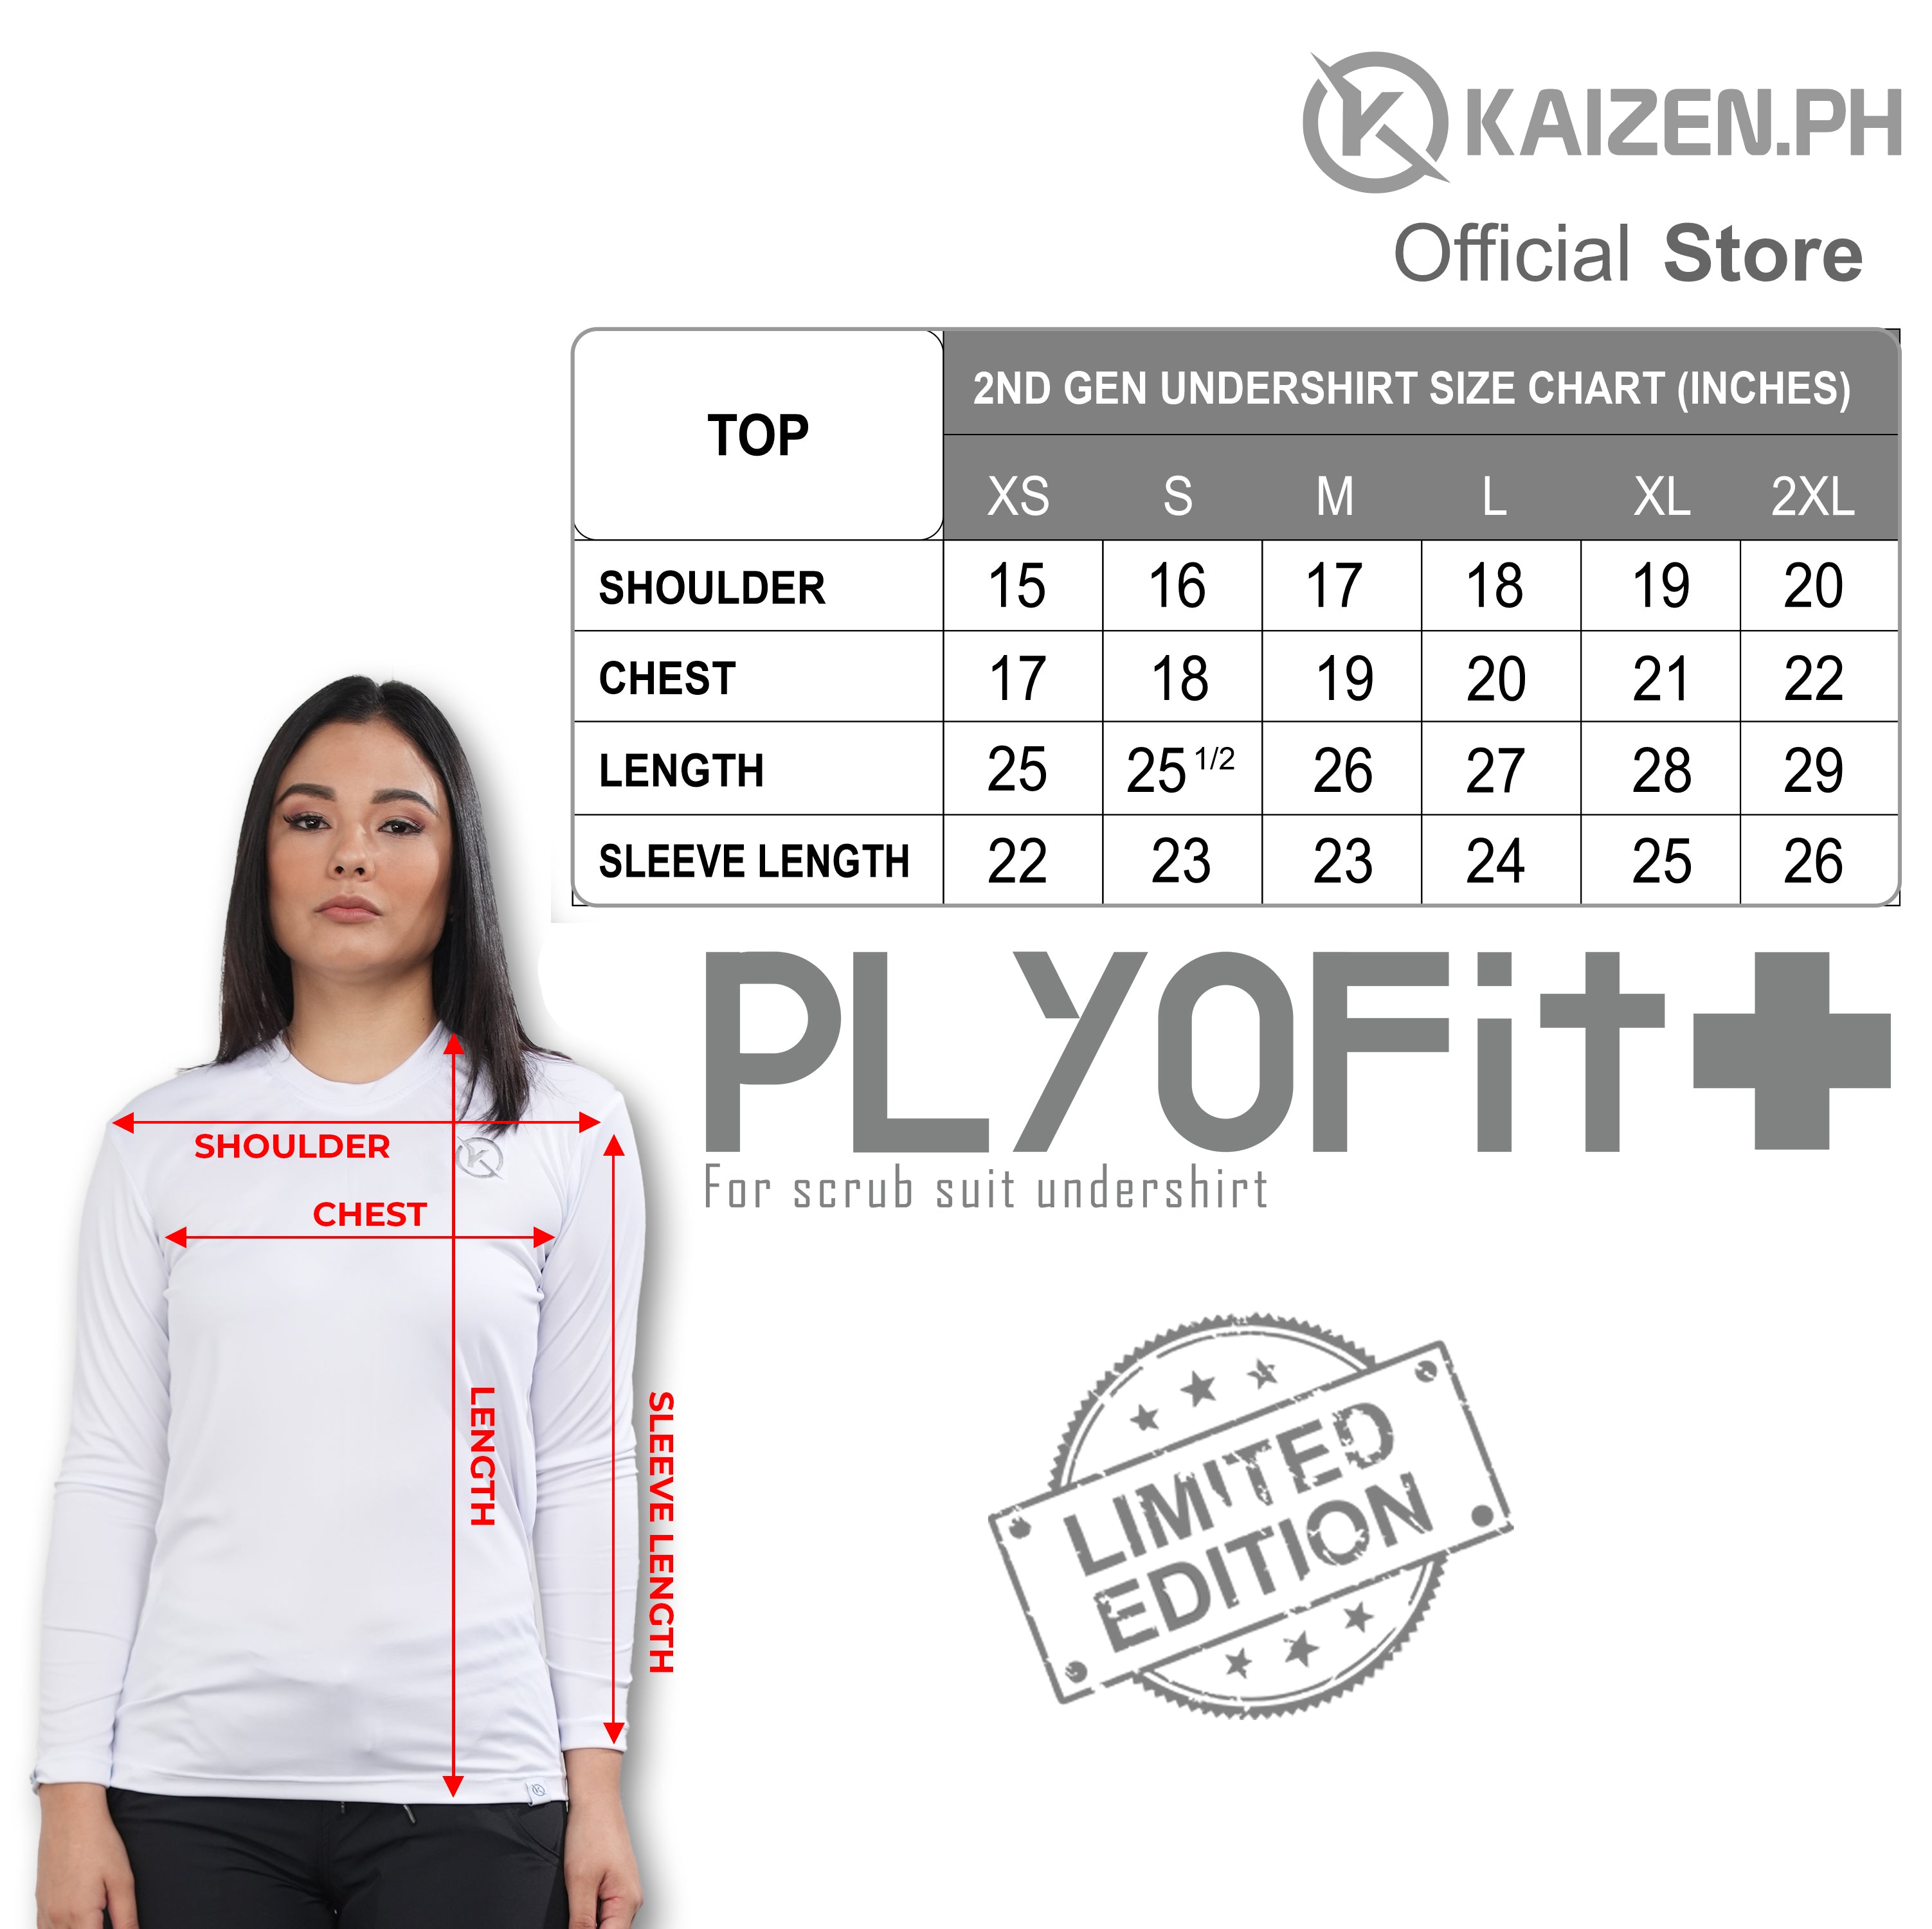 PLYOFit+ Undershirt